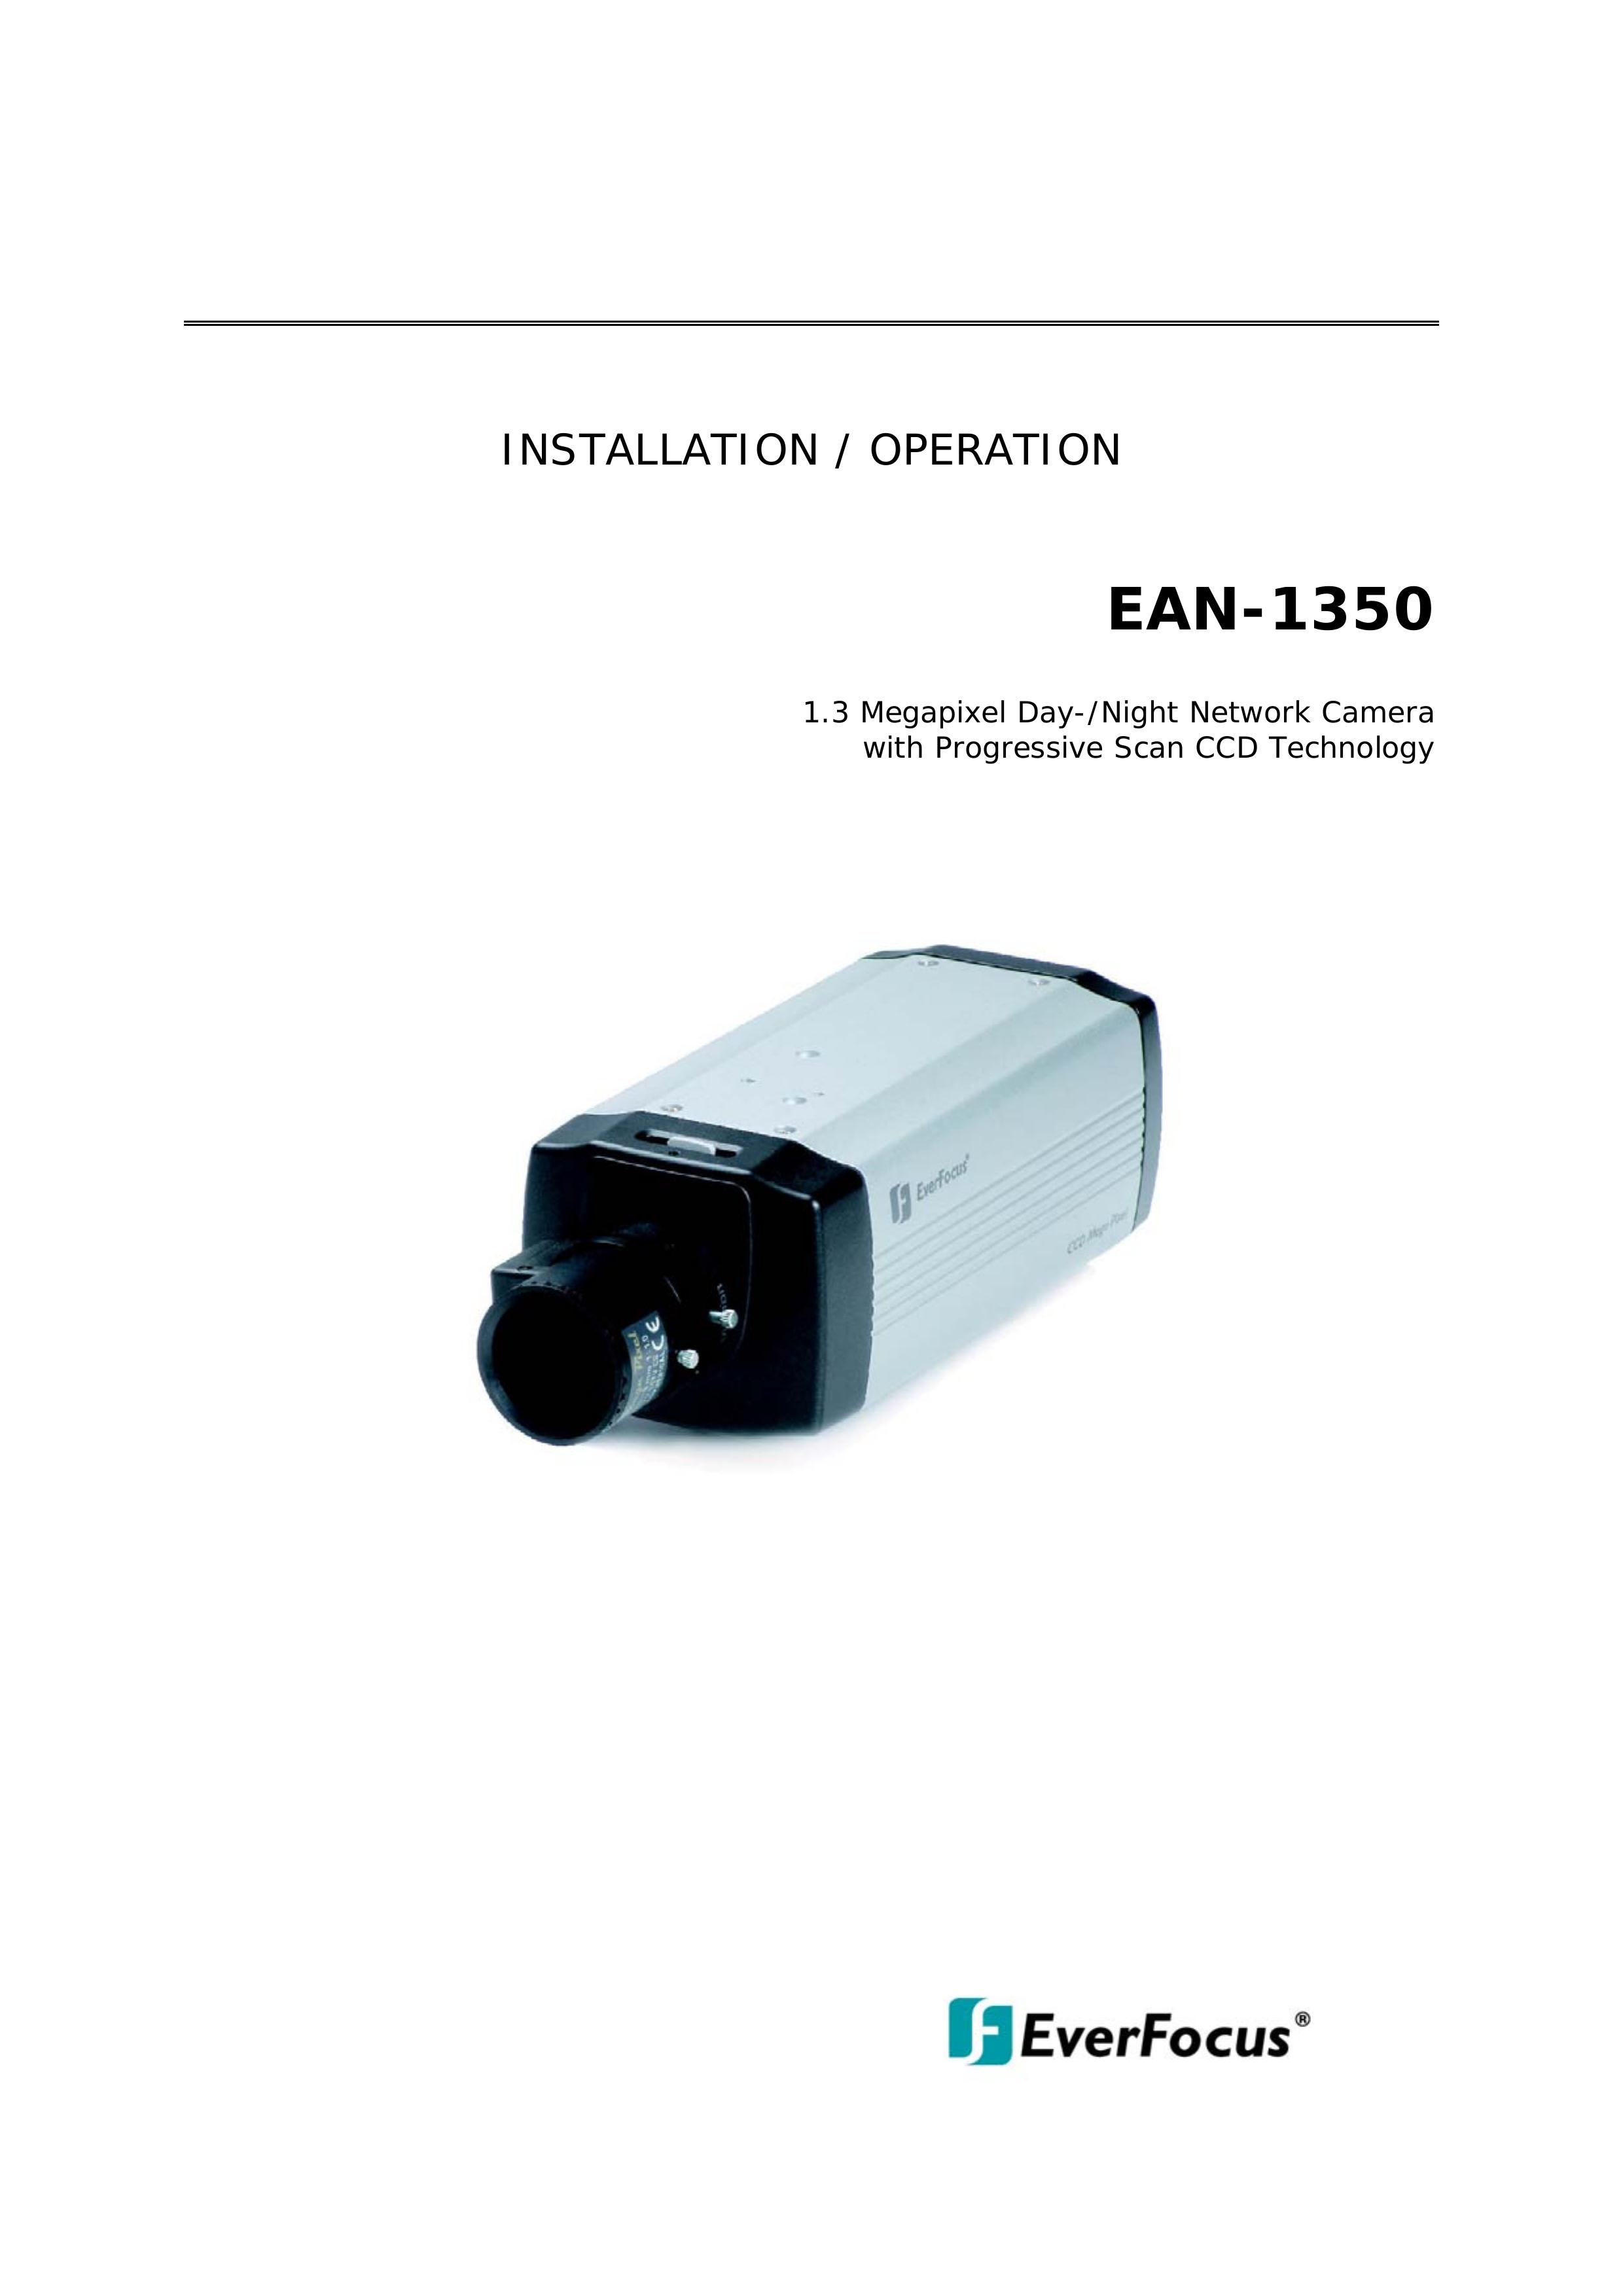 EverFocus EAN-1350 Security Camera User Manual